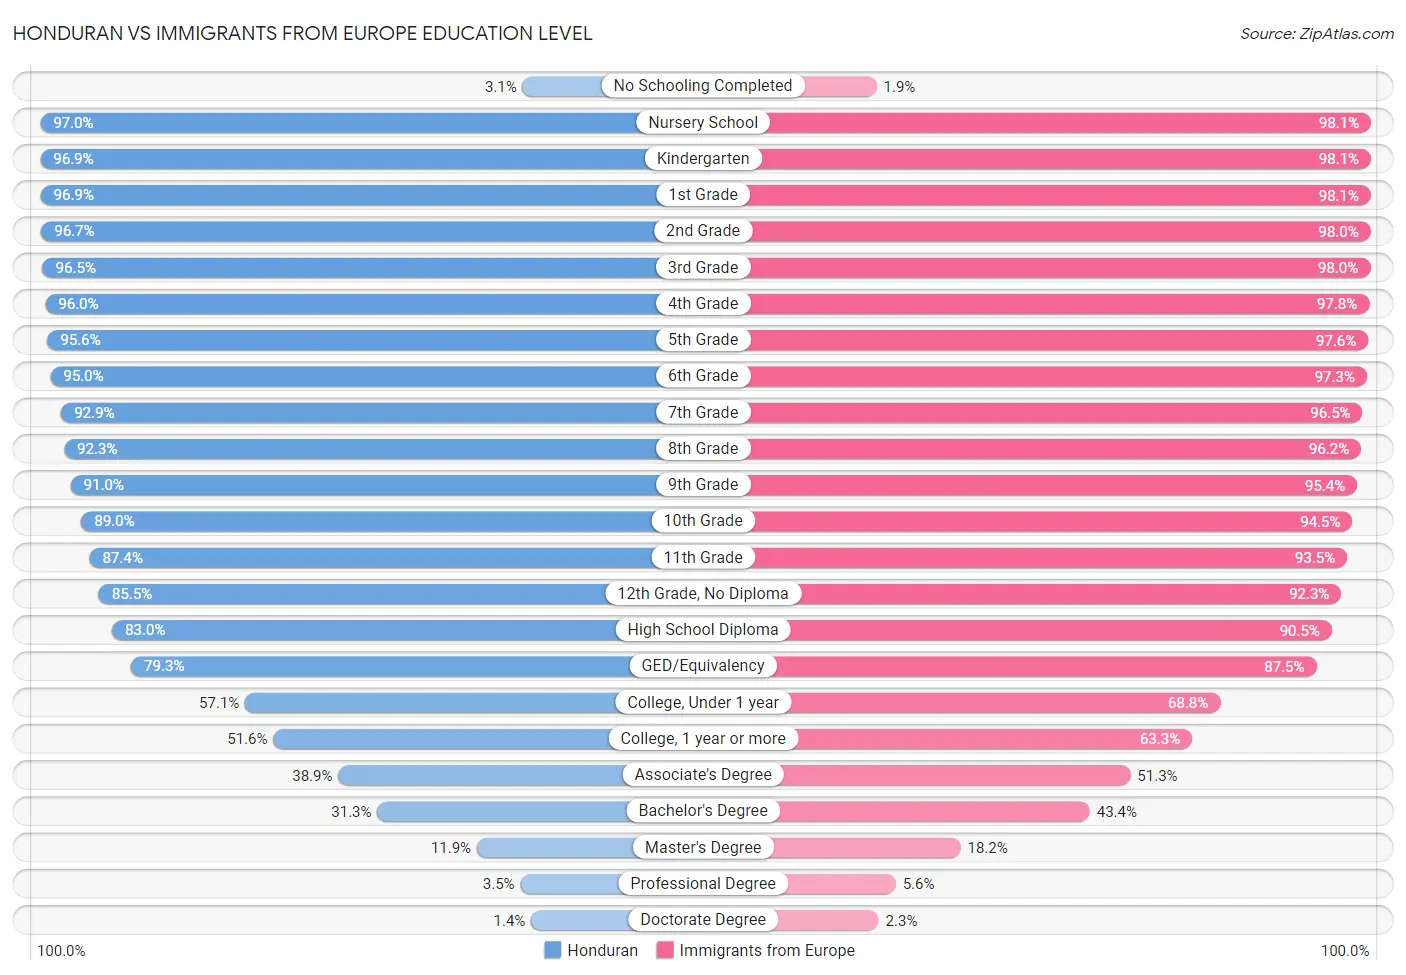 Honduran vs Immigrants from Europe Education Level